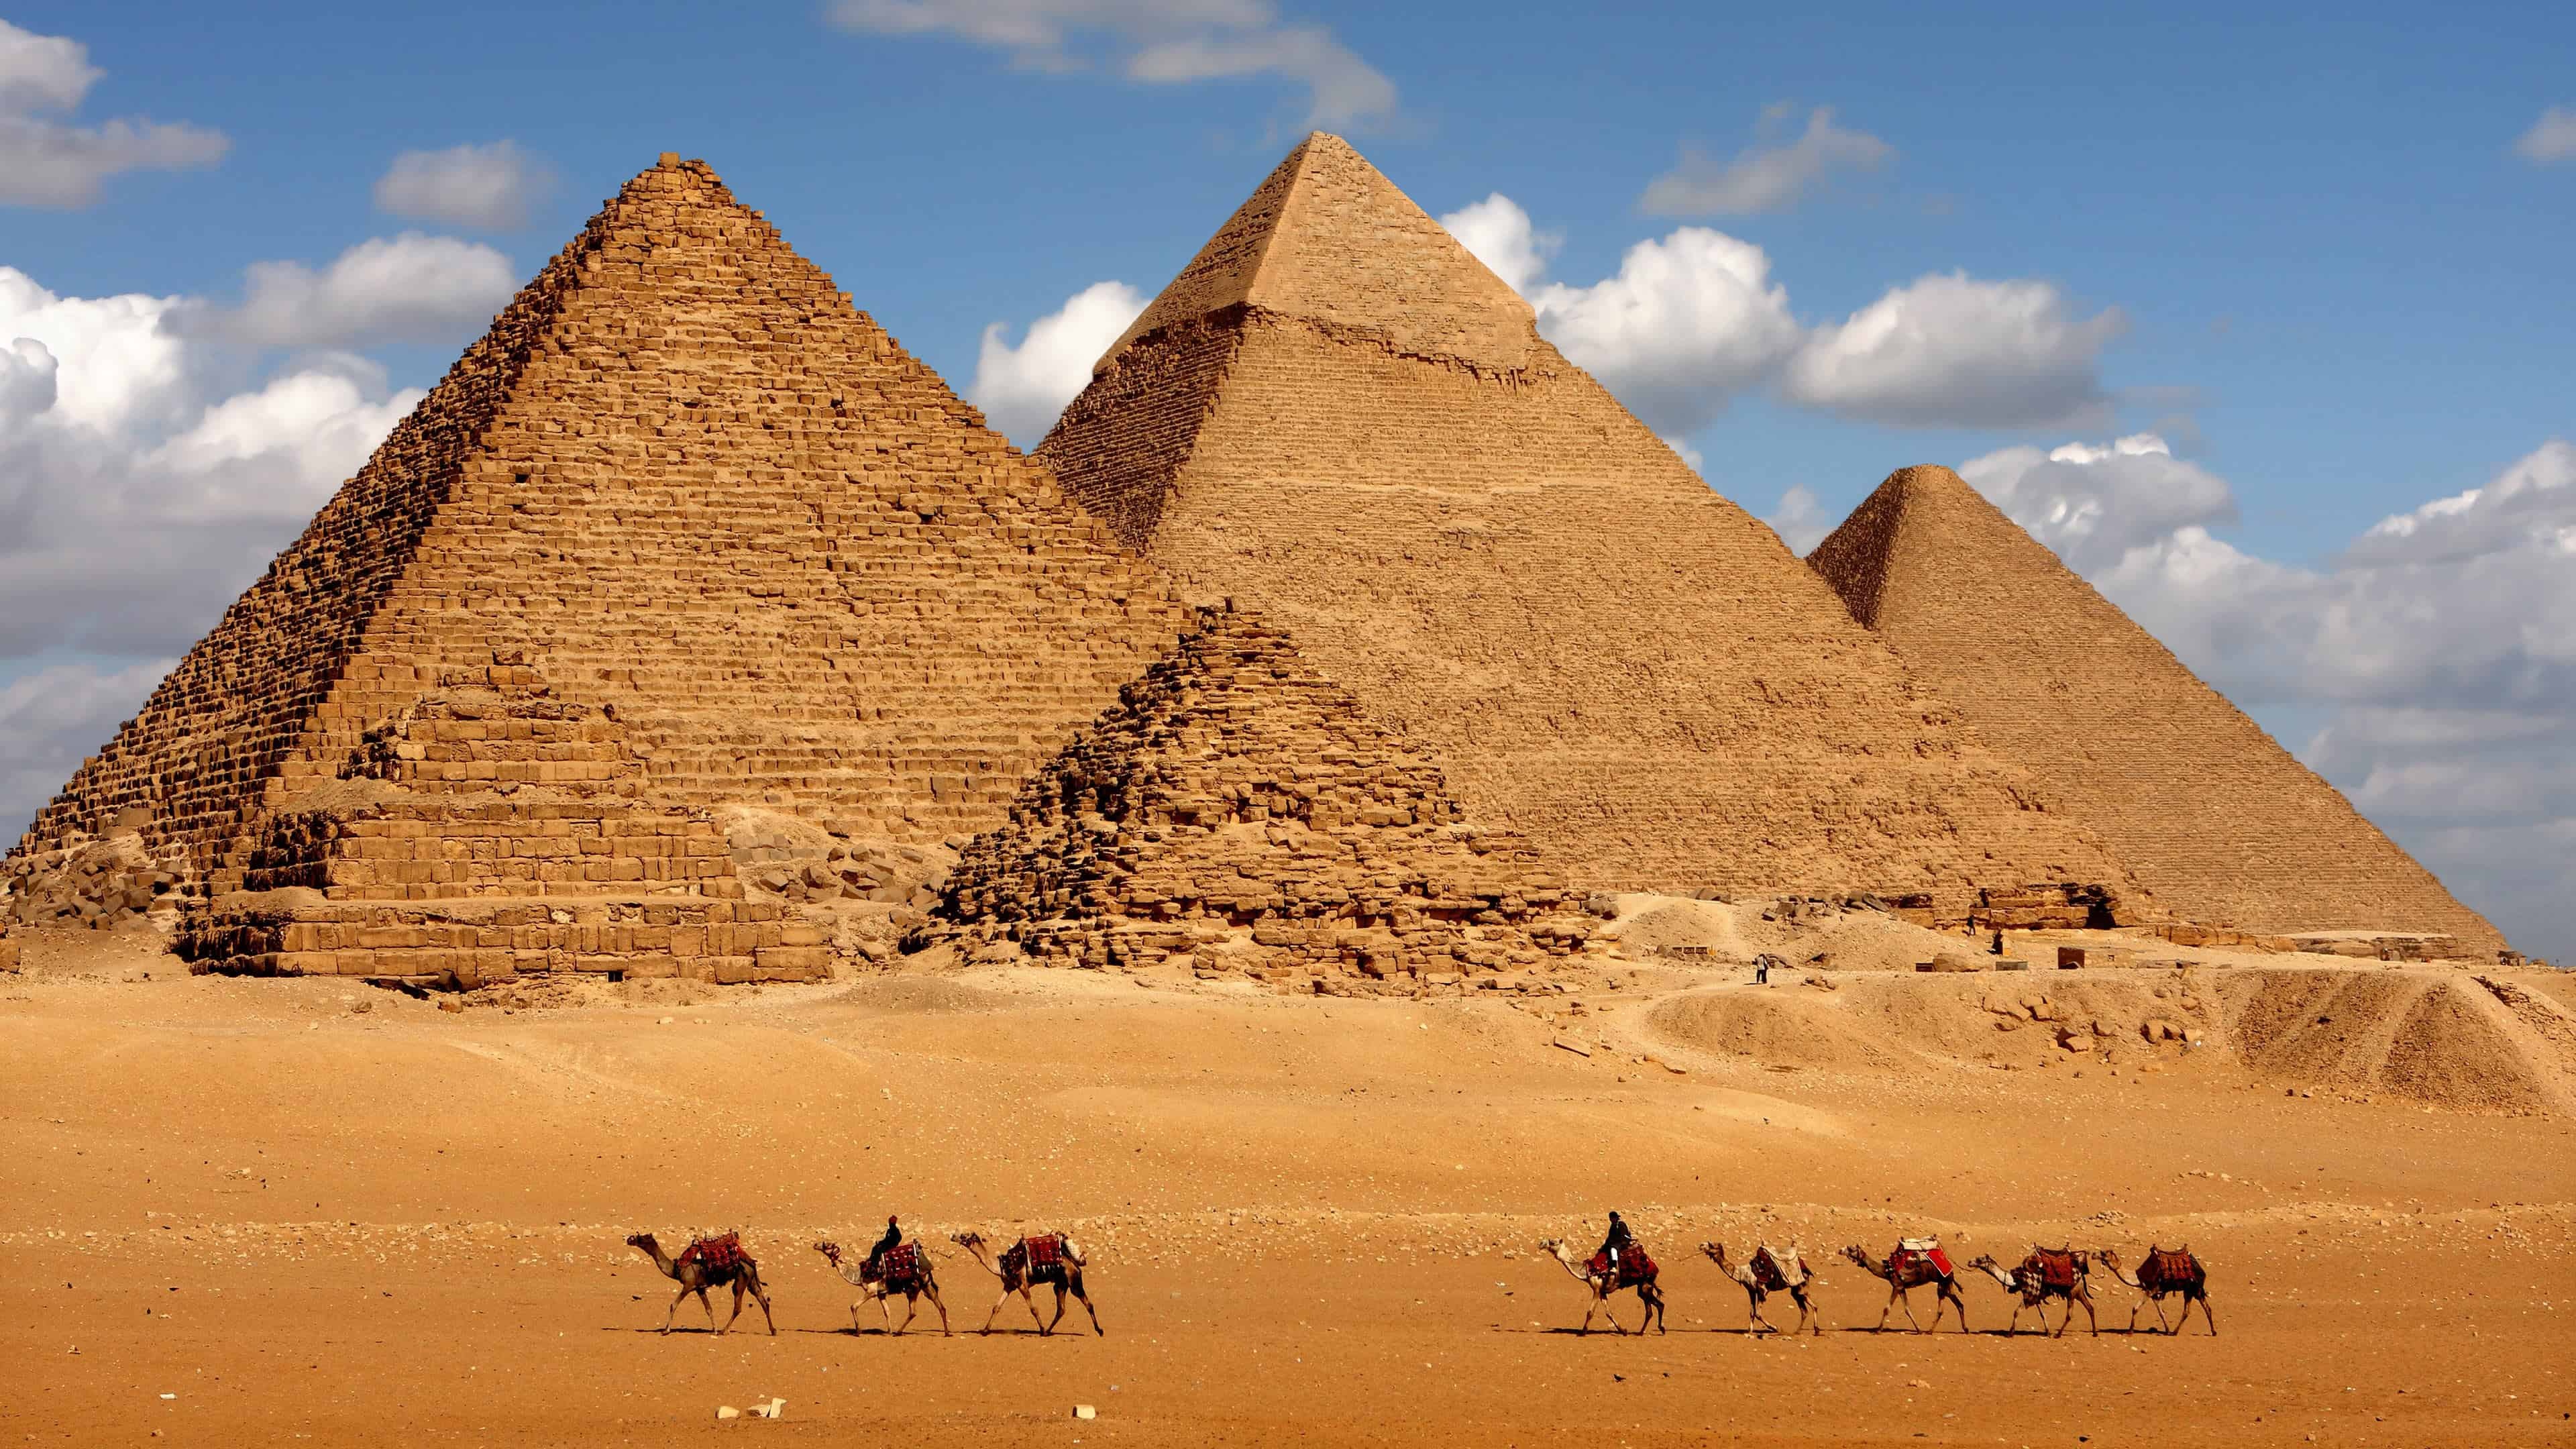 Pyramids of Giza, Pyramids and camels, UHD 4K wallpaper, Egyptian wonders, 3840x2160 4K Desktop